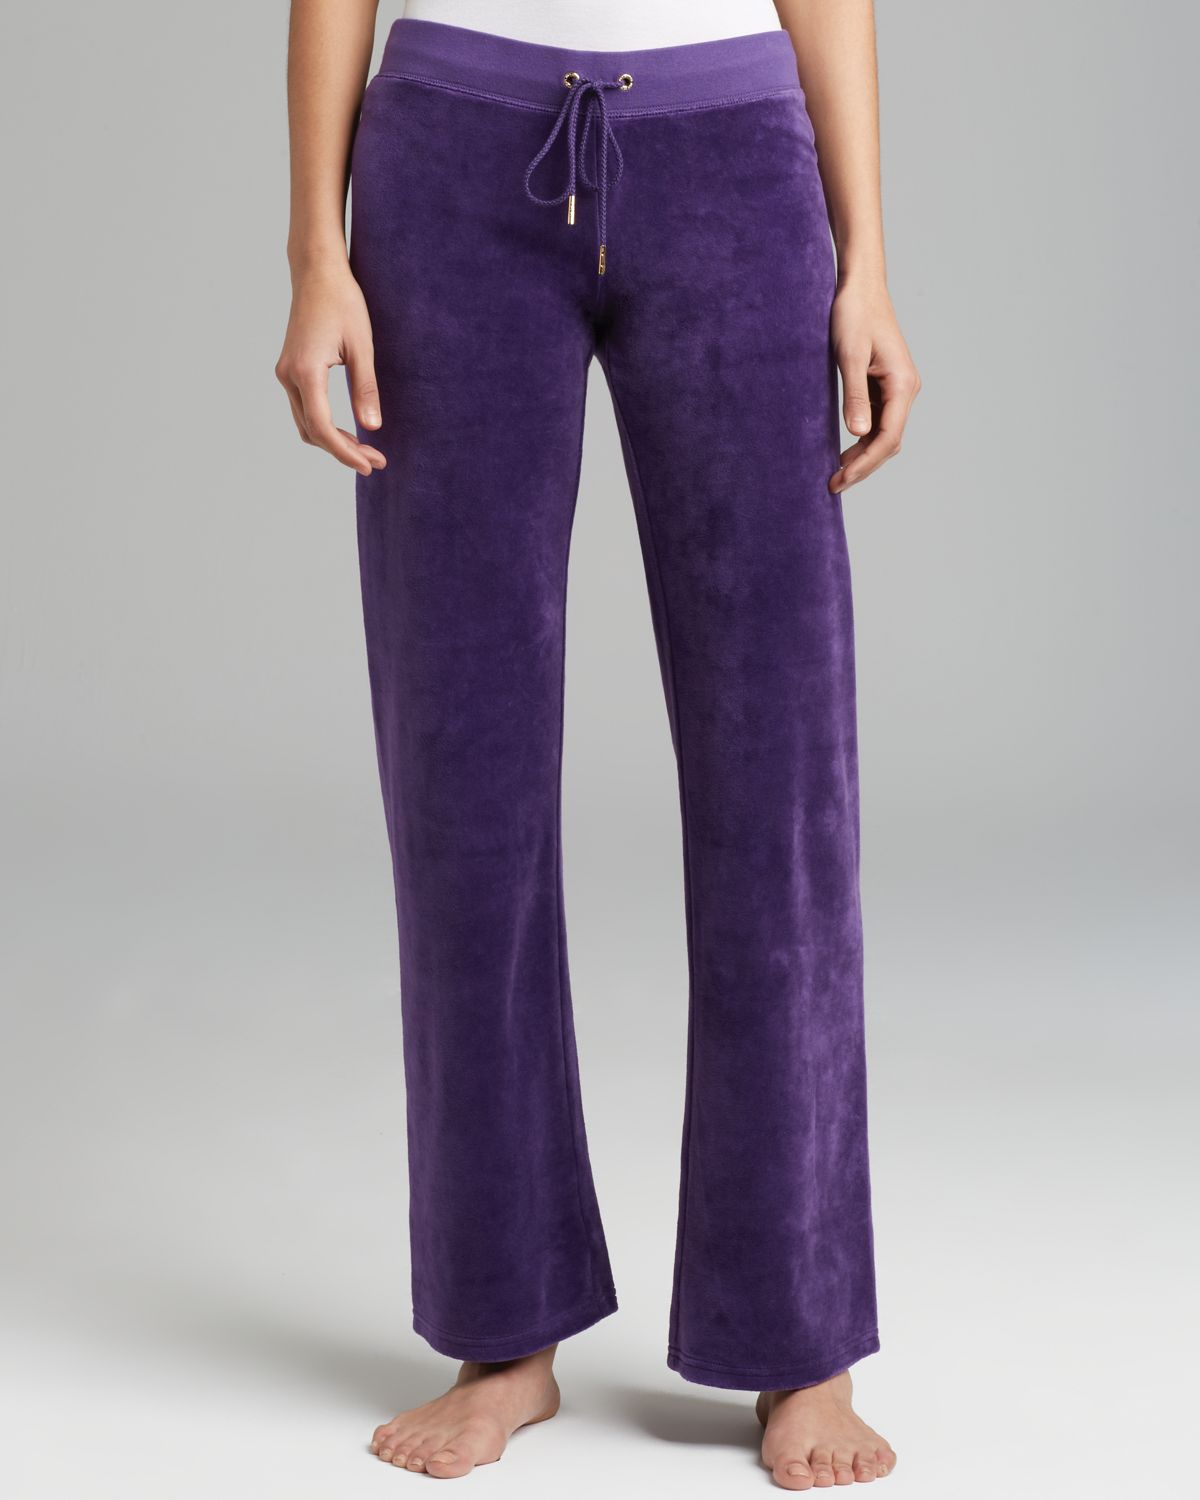 Lyst - Juicy Couture Pants Velour Bling Original Leg in Purple